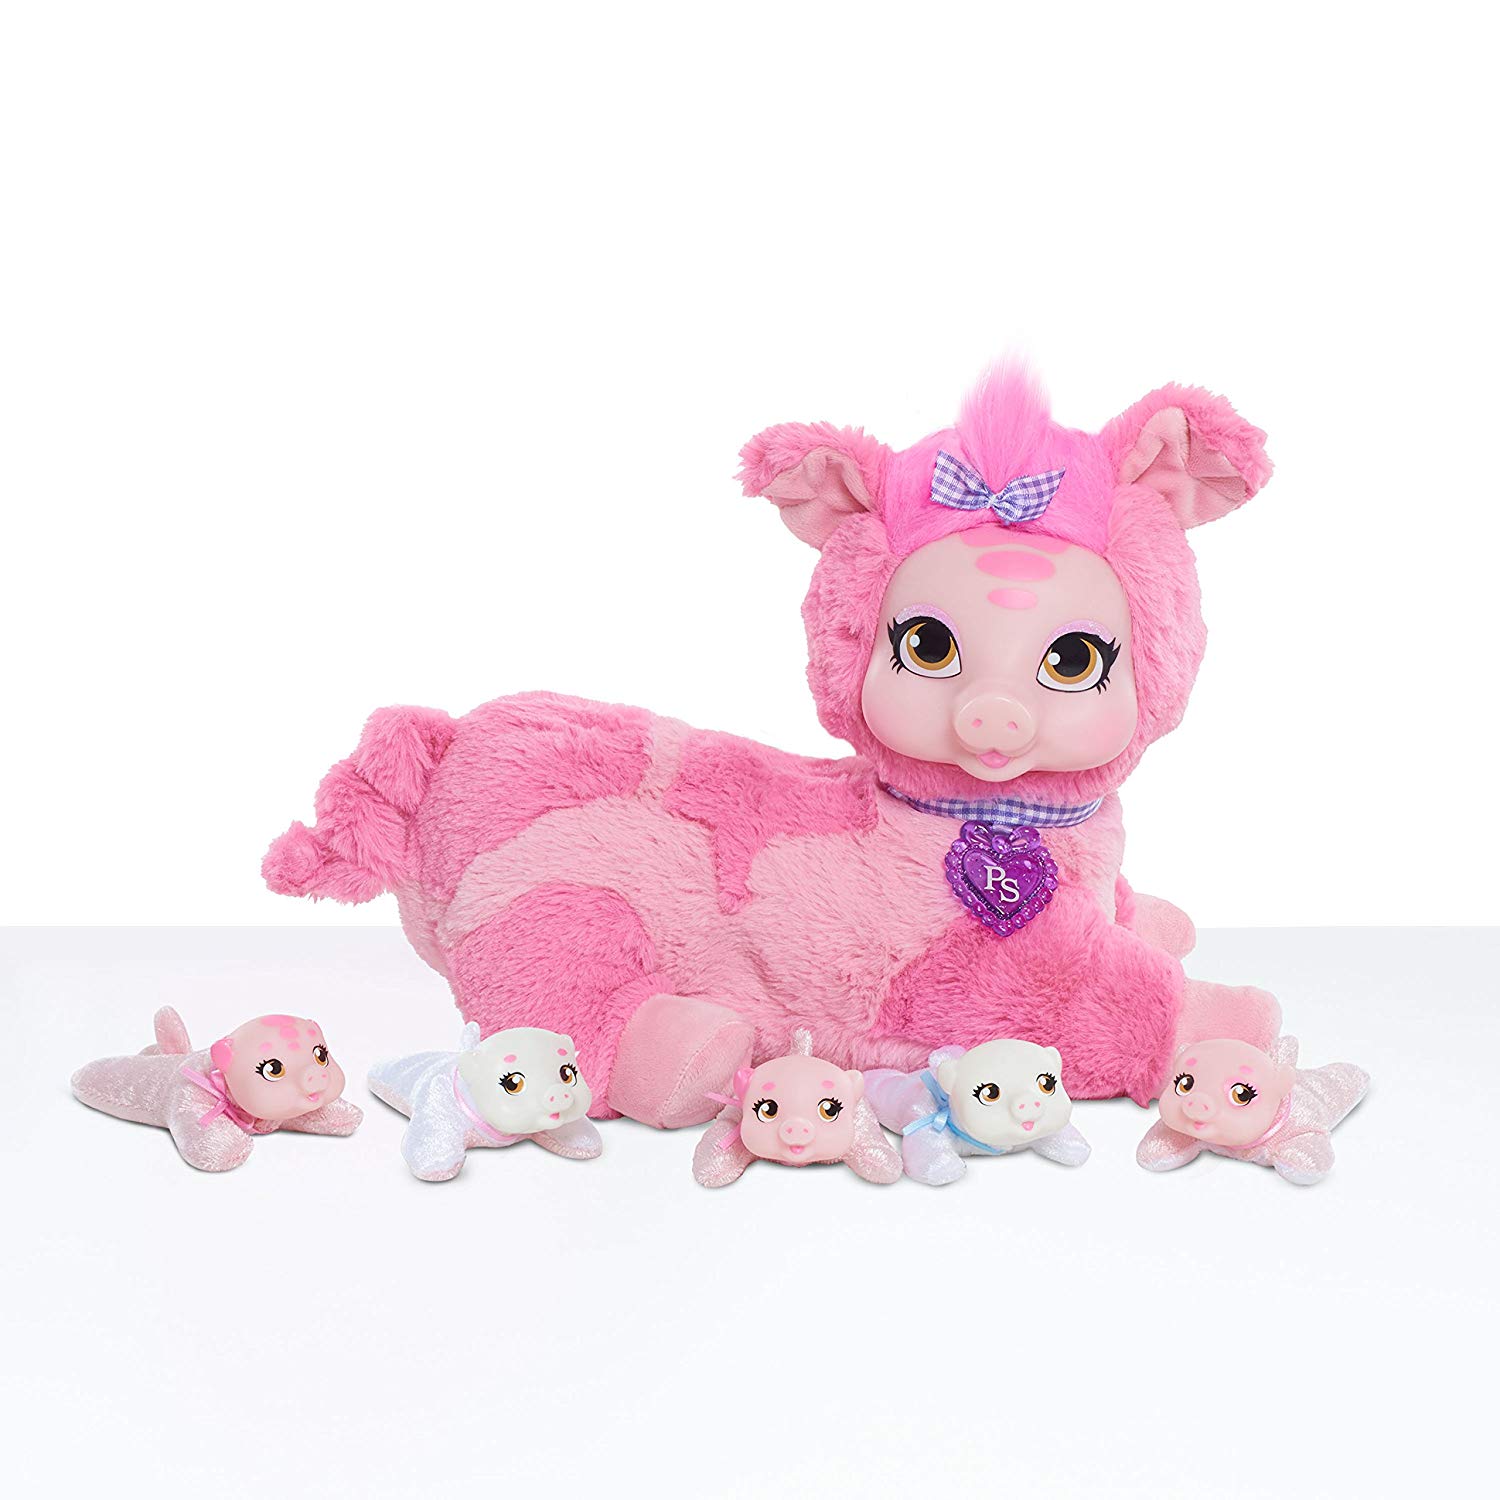 Piggy Surprise Plush – Piper (Multi-Color) Only $8.85!